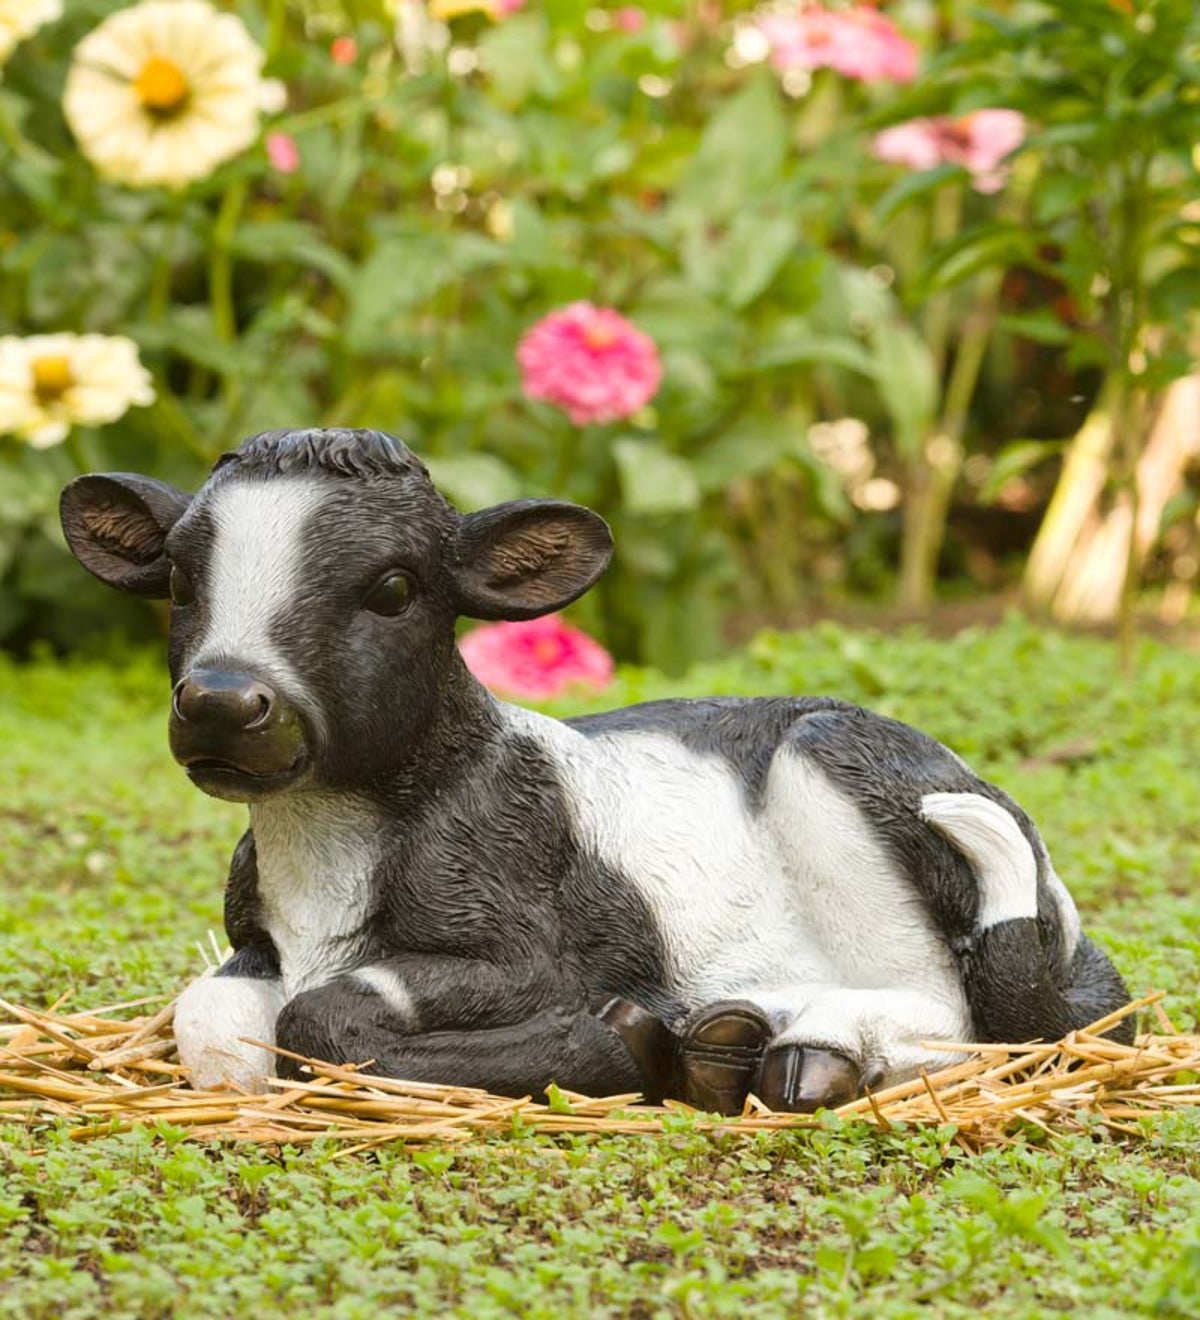 Baby Cow Garden Statue